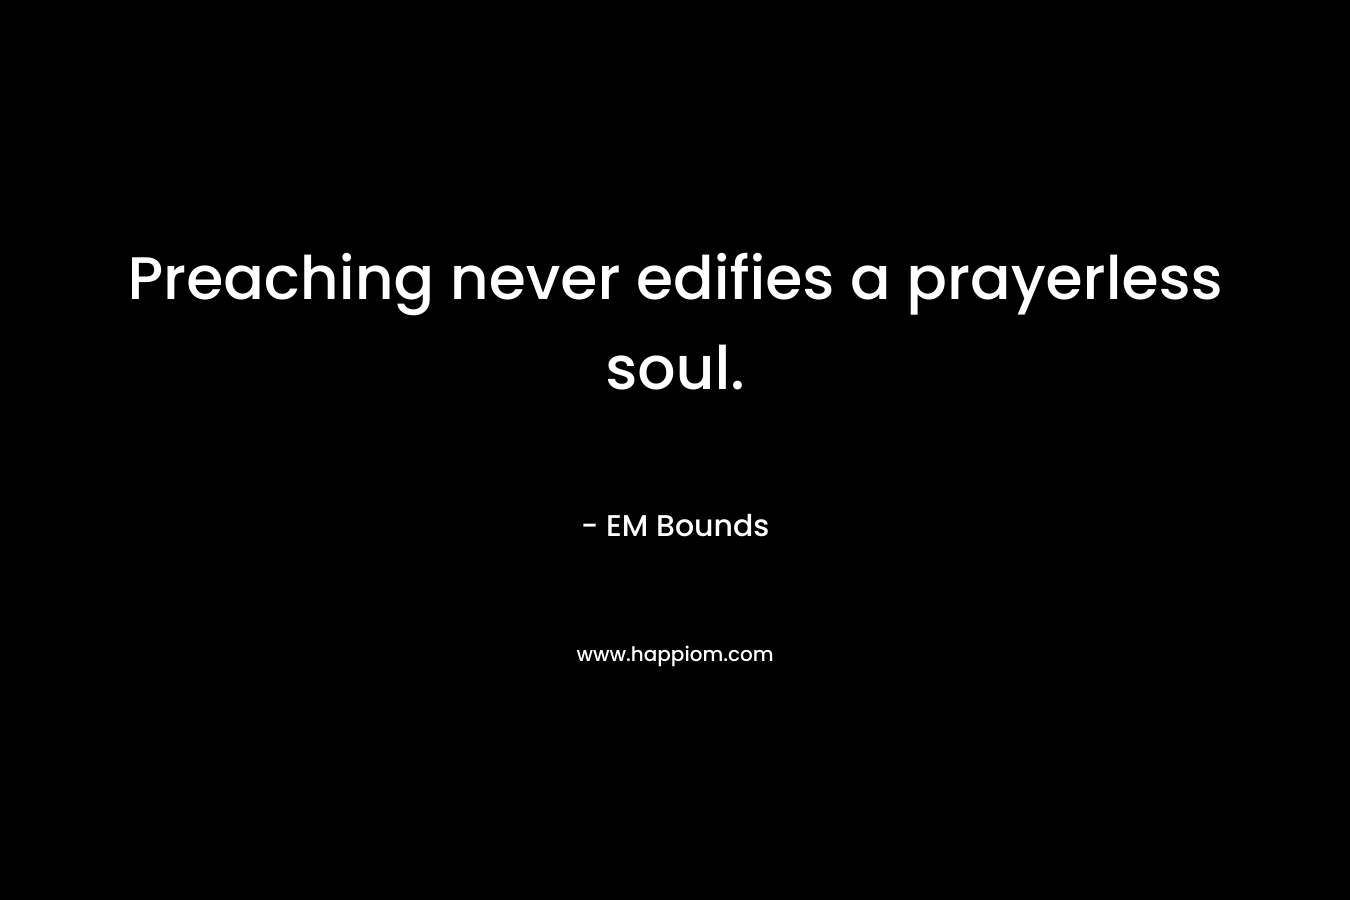 Preaching never edifies a prayerless soul.